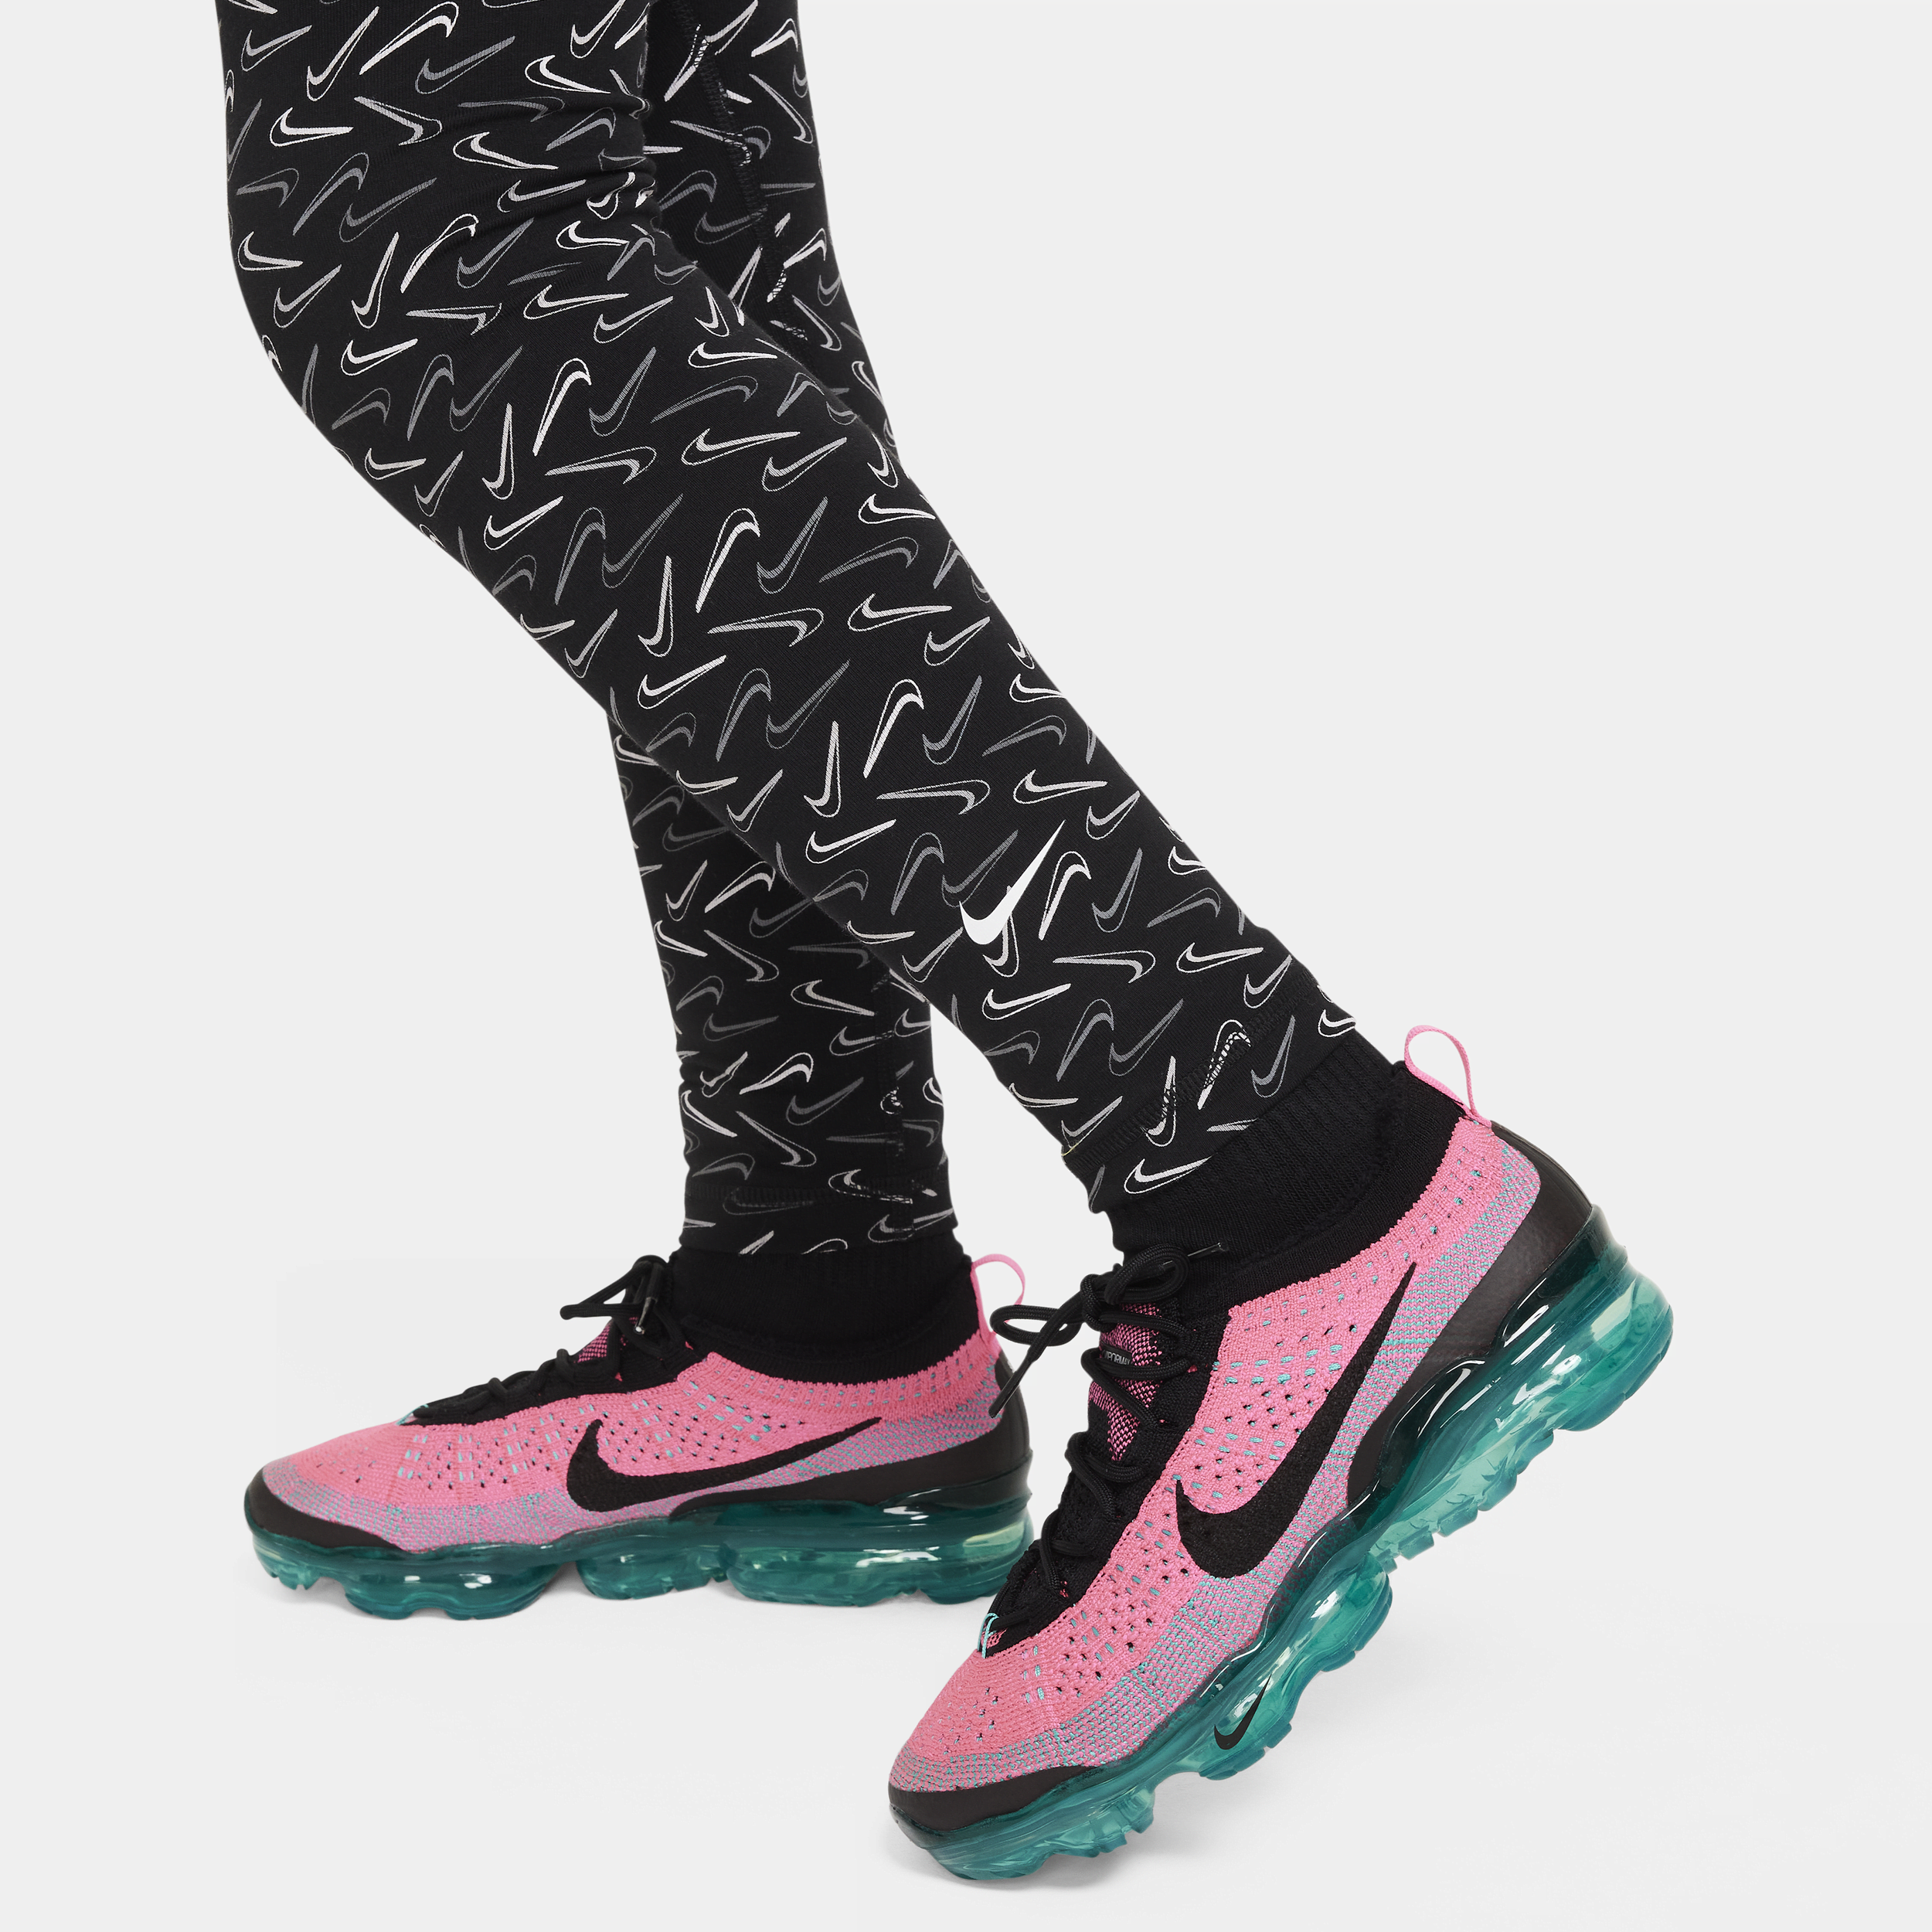 Nike Sportswear Essential legging met halfhoge taille voor meisjes Zwart